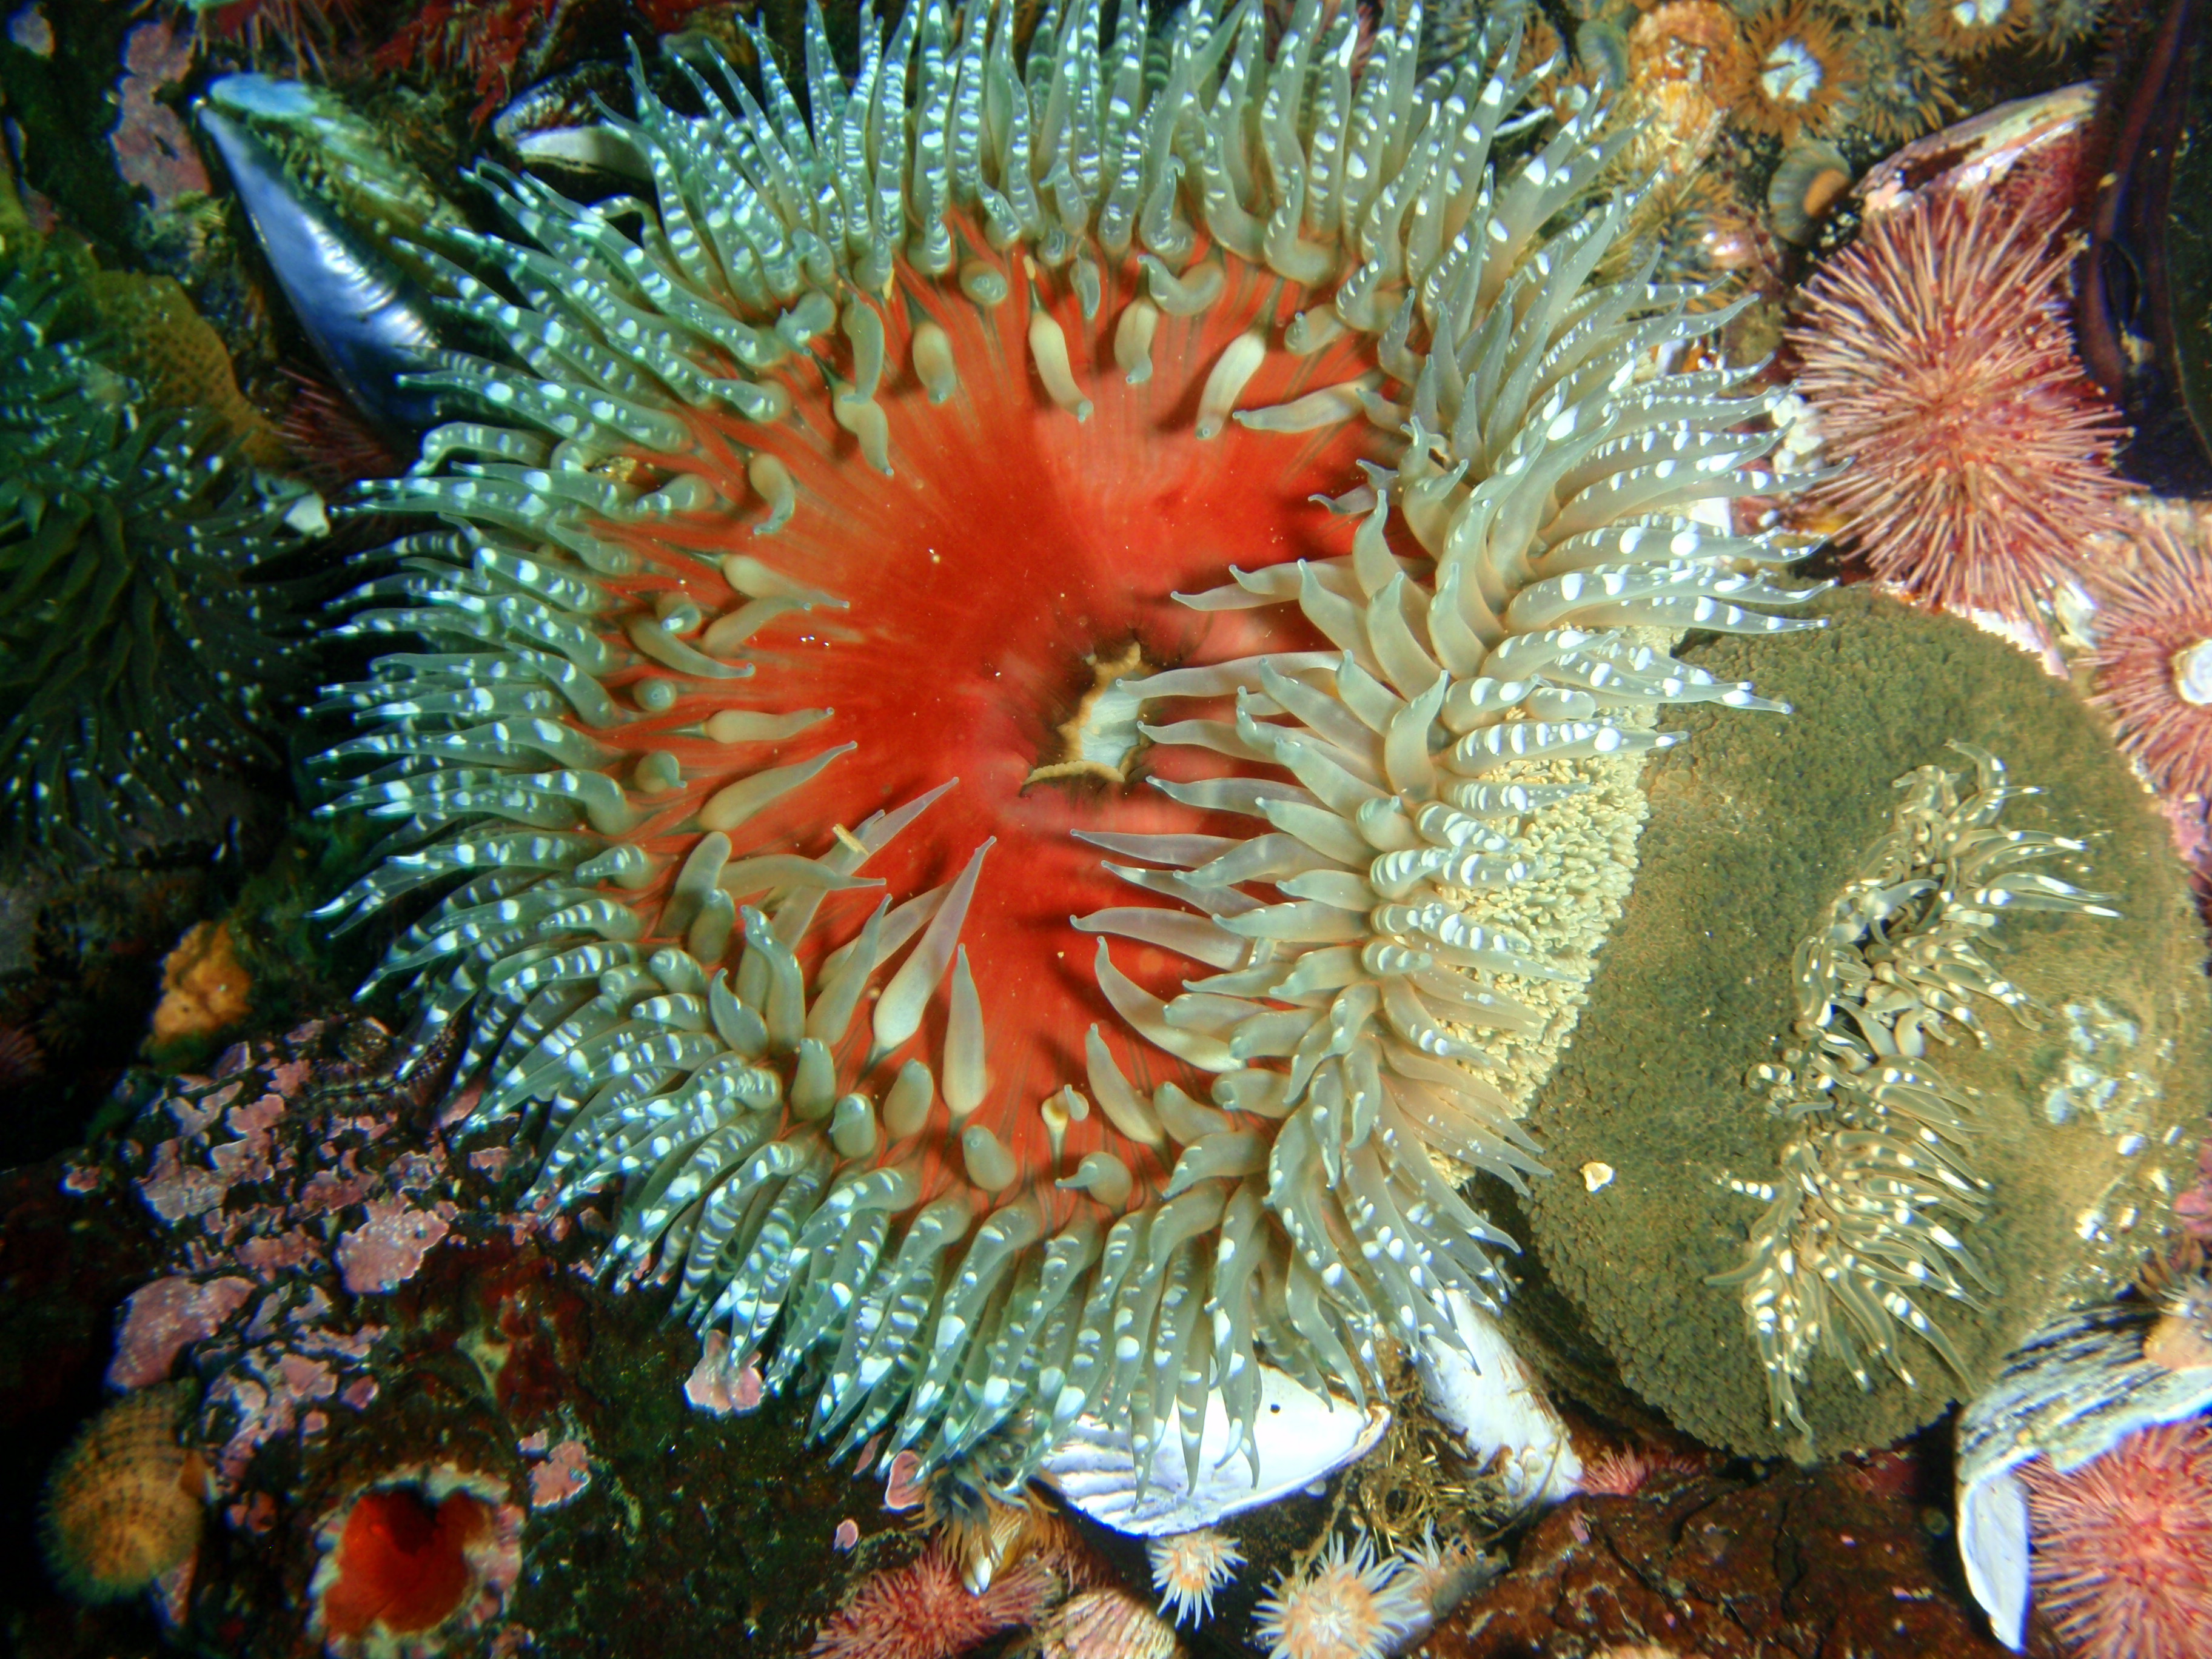 Sandy anemone at Stonhenge Reef P4137421